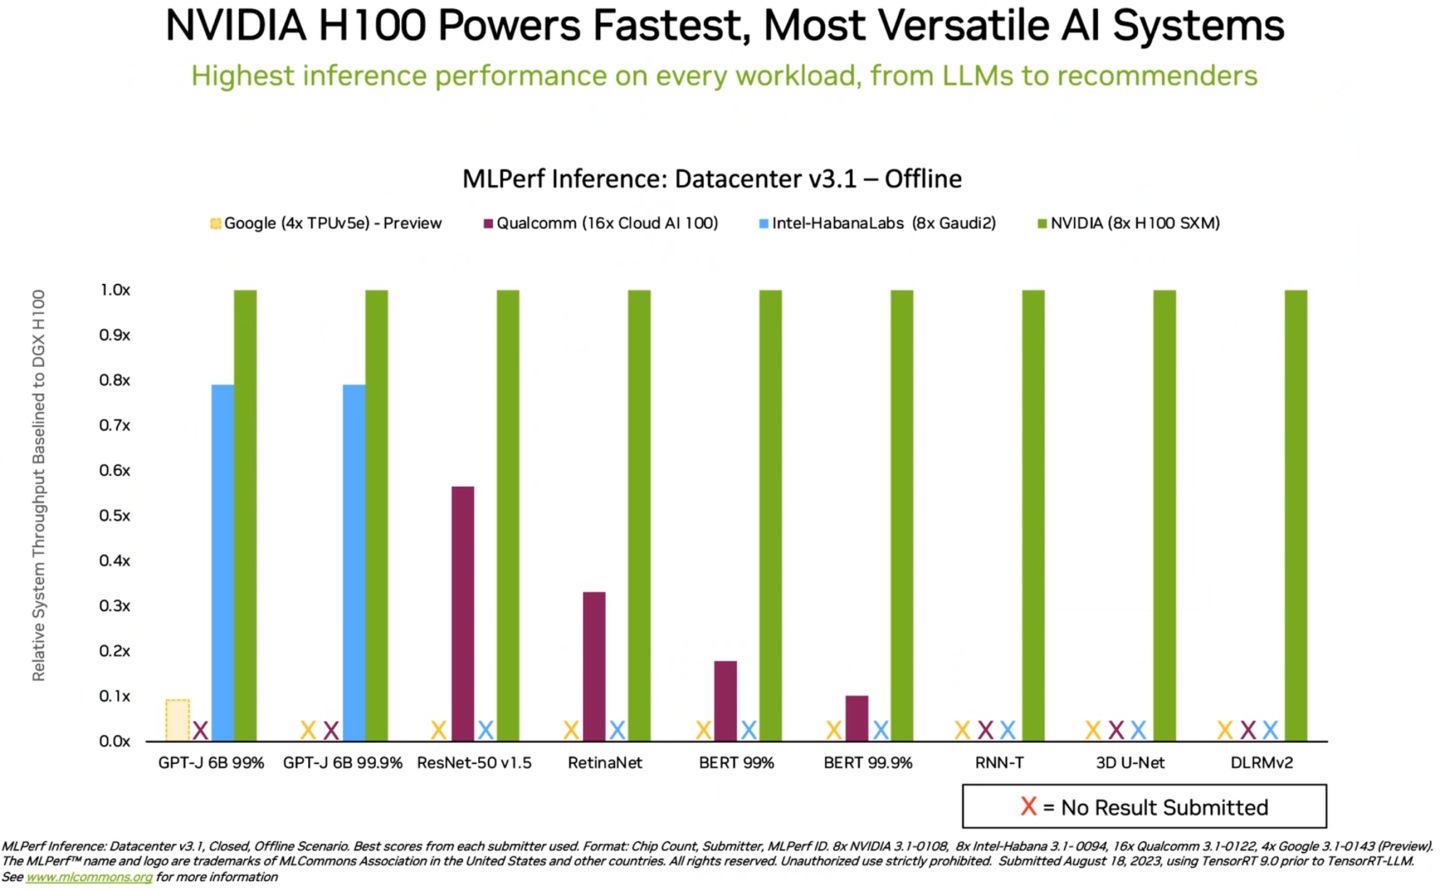 H100在MLPerf v3.1的成績領先Google、Qualcomm、Intel對手。其打叉的項目為沒有提交成績。